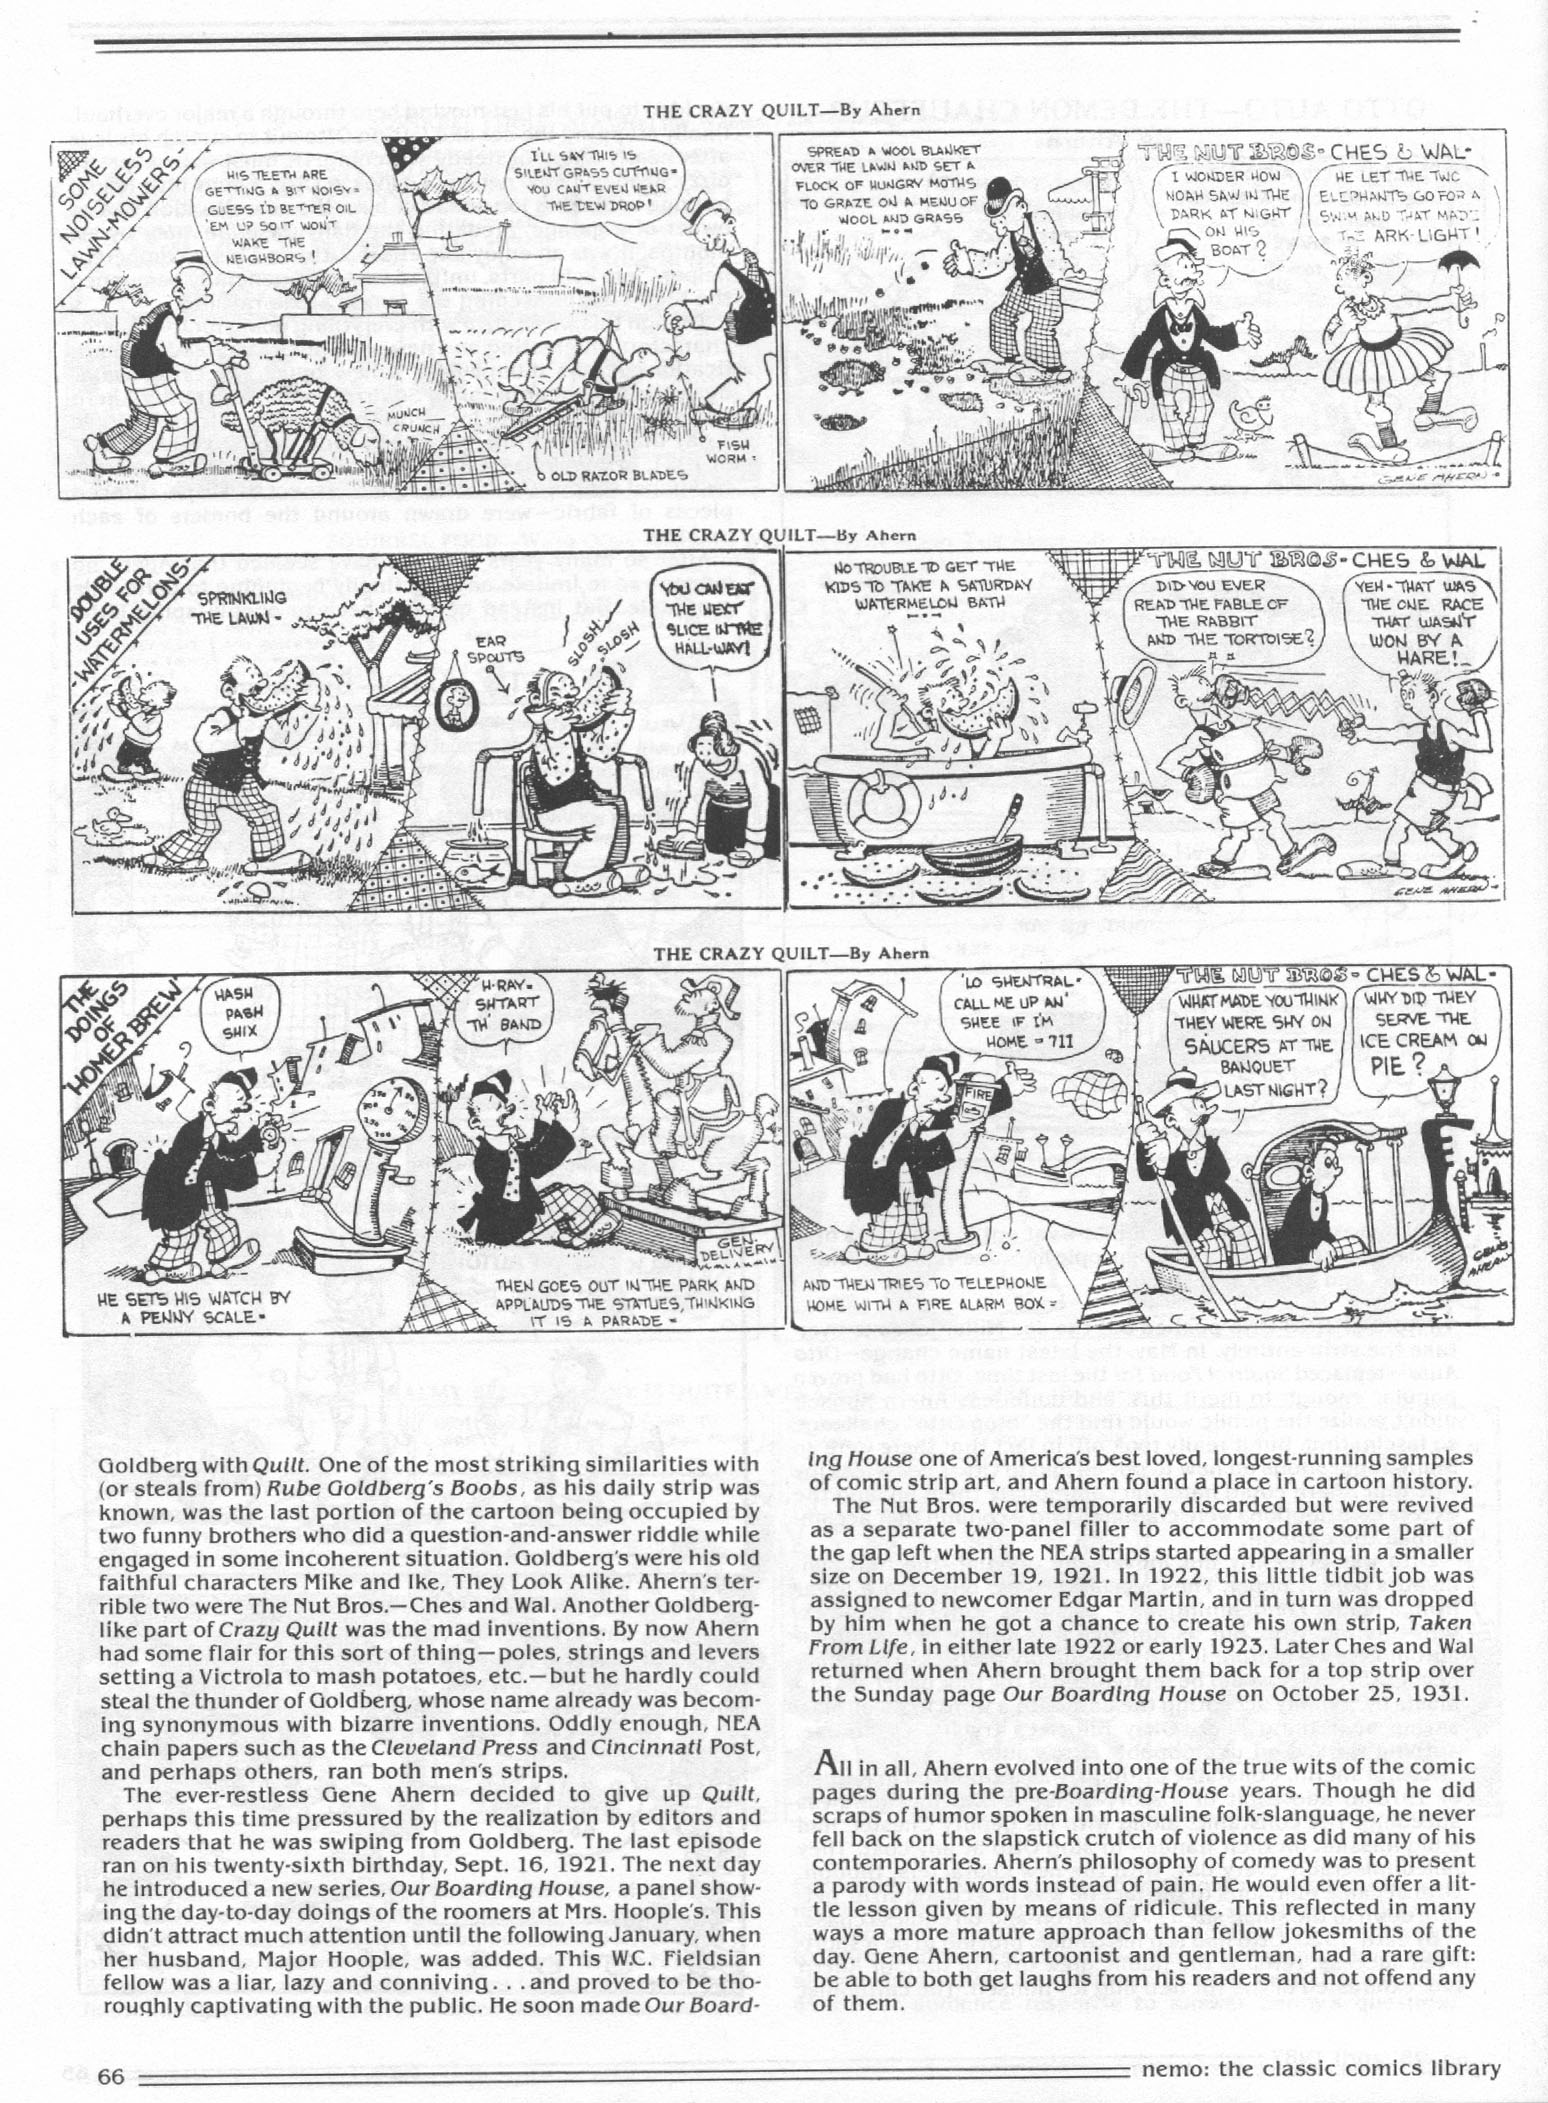 Read online Nemo: The Classic Comics Library comic -  Issue #25 - 62